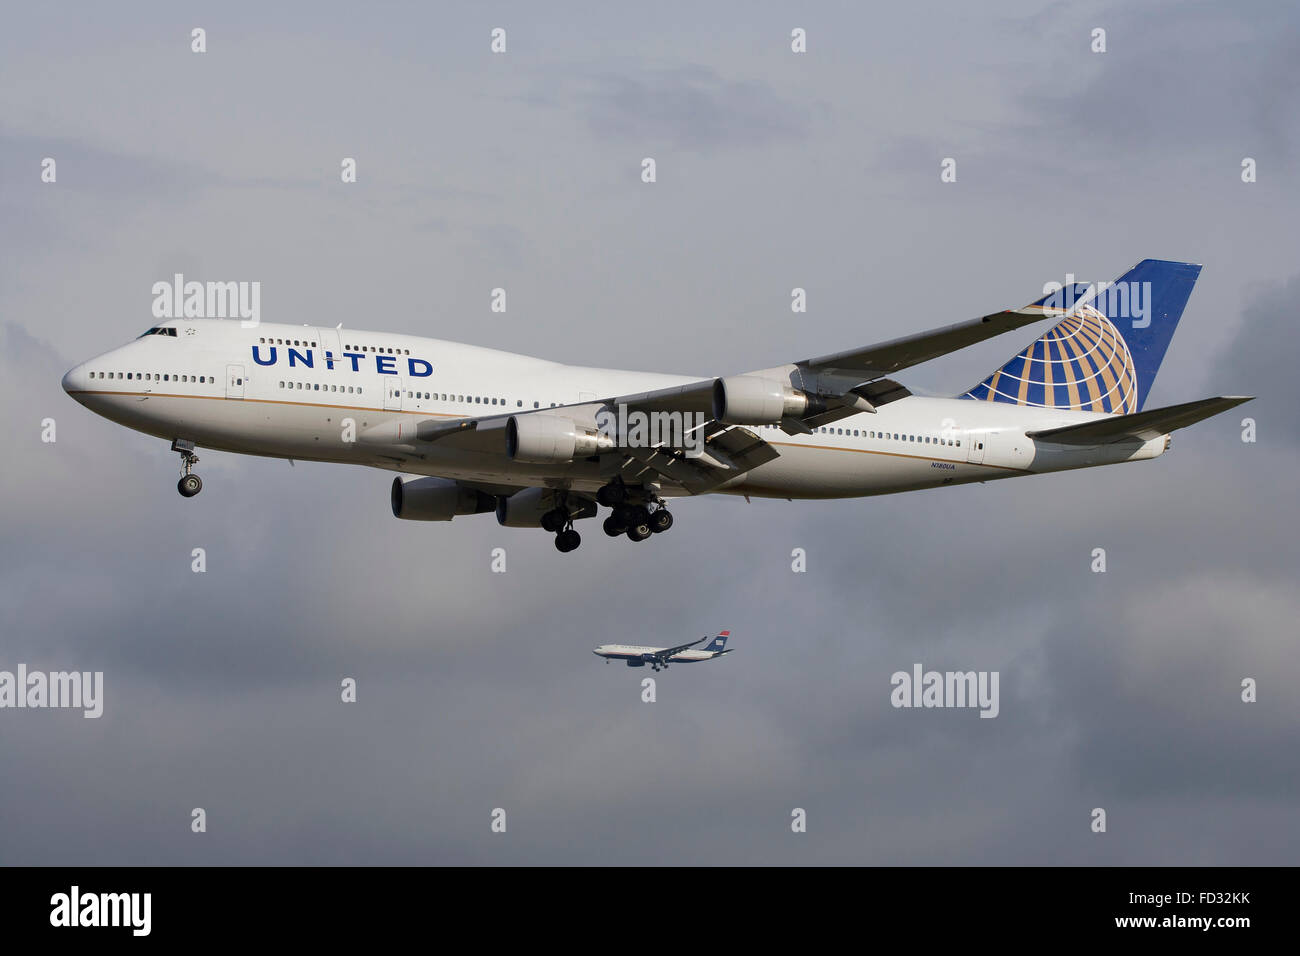 United Airlines Boeing 747-400 landing in Frankfurt parallel to US